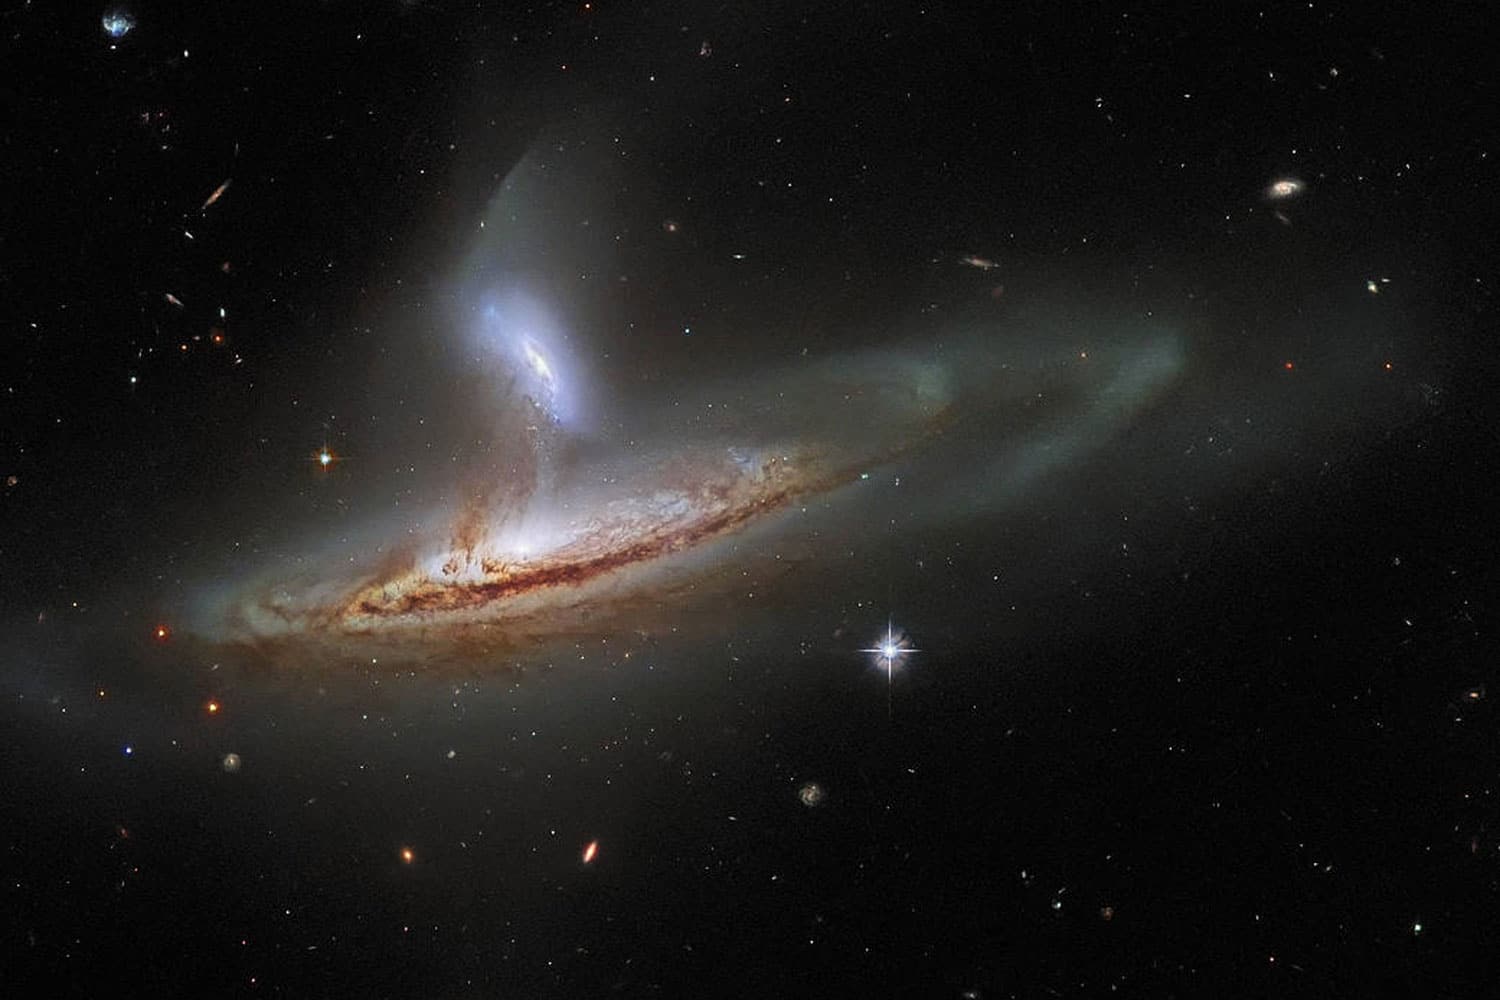 Hubble captures a cosmic interaction thumbnail